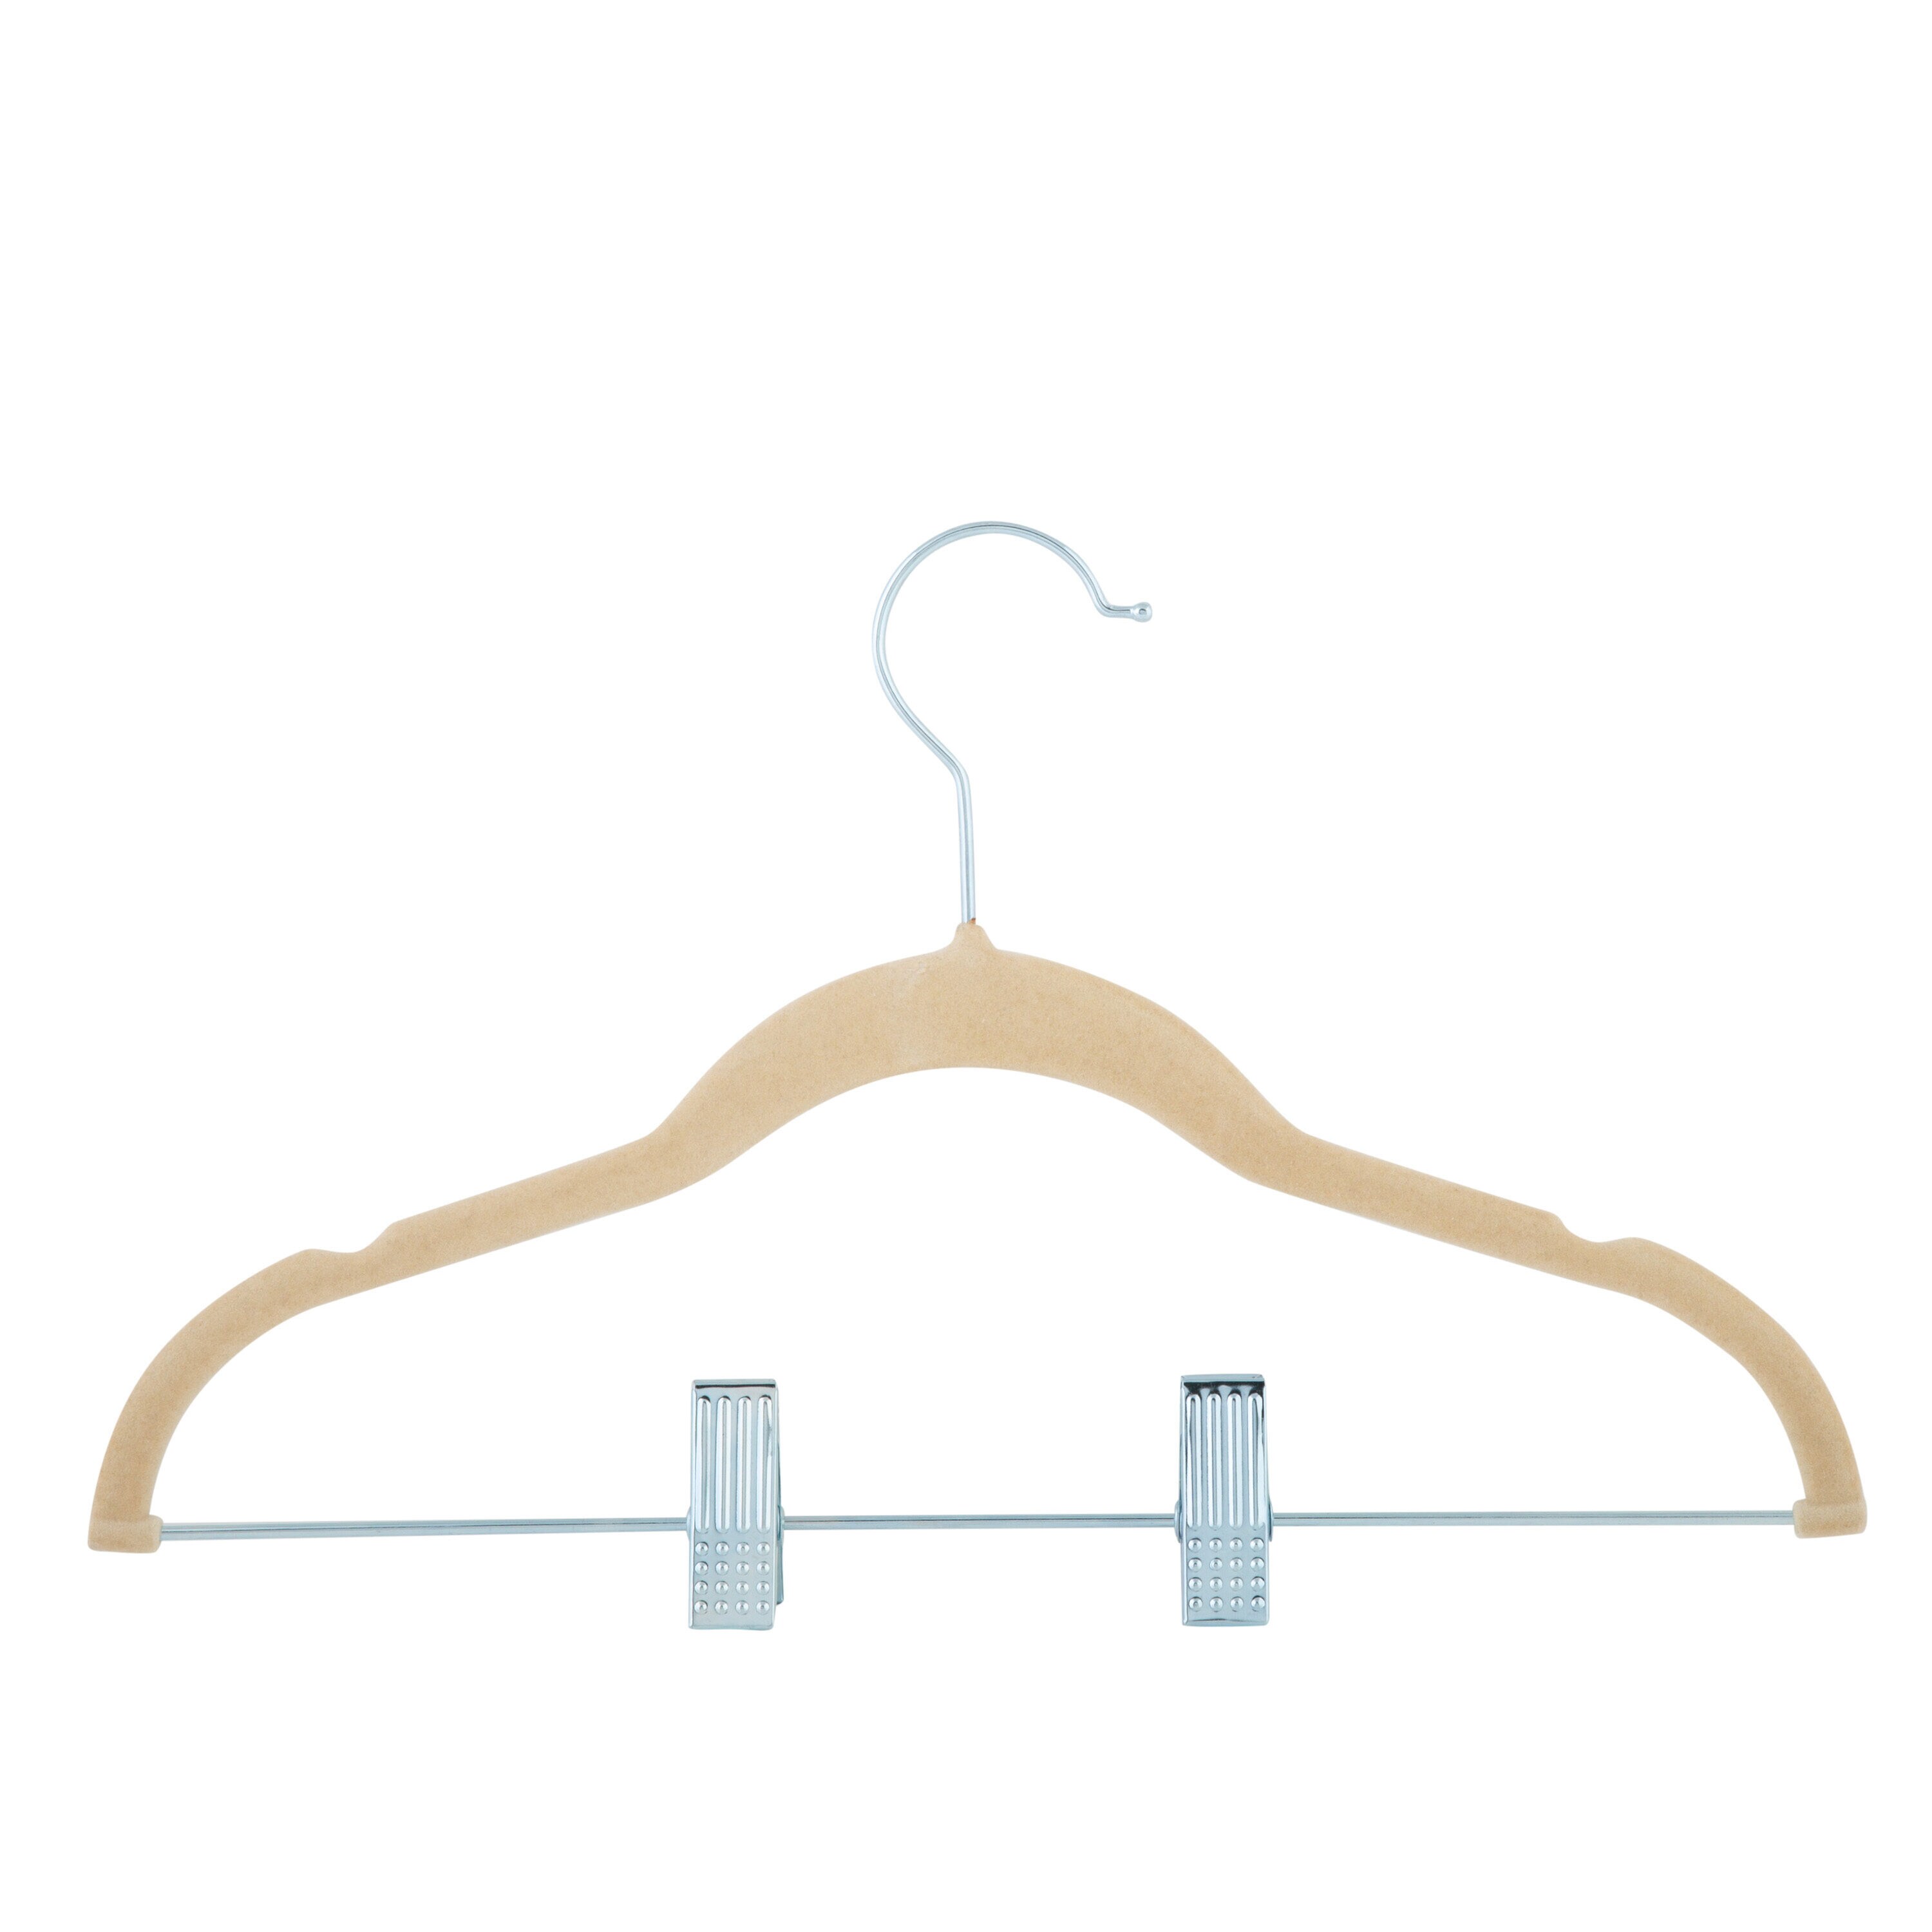 Simplify 10-Pack Plastic Non-slip Grip Clothing Hanger (Grey) in